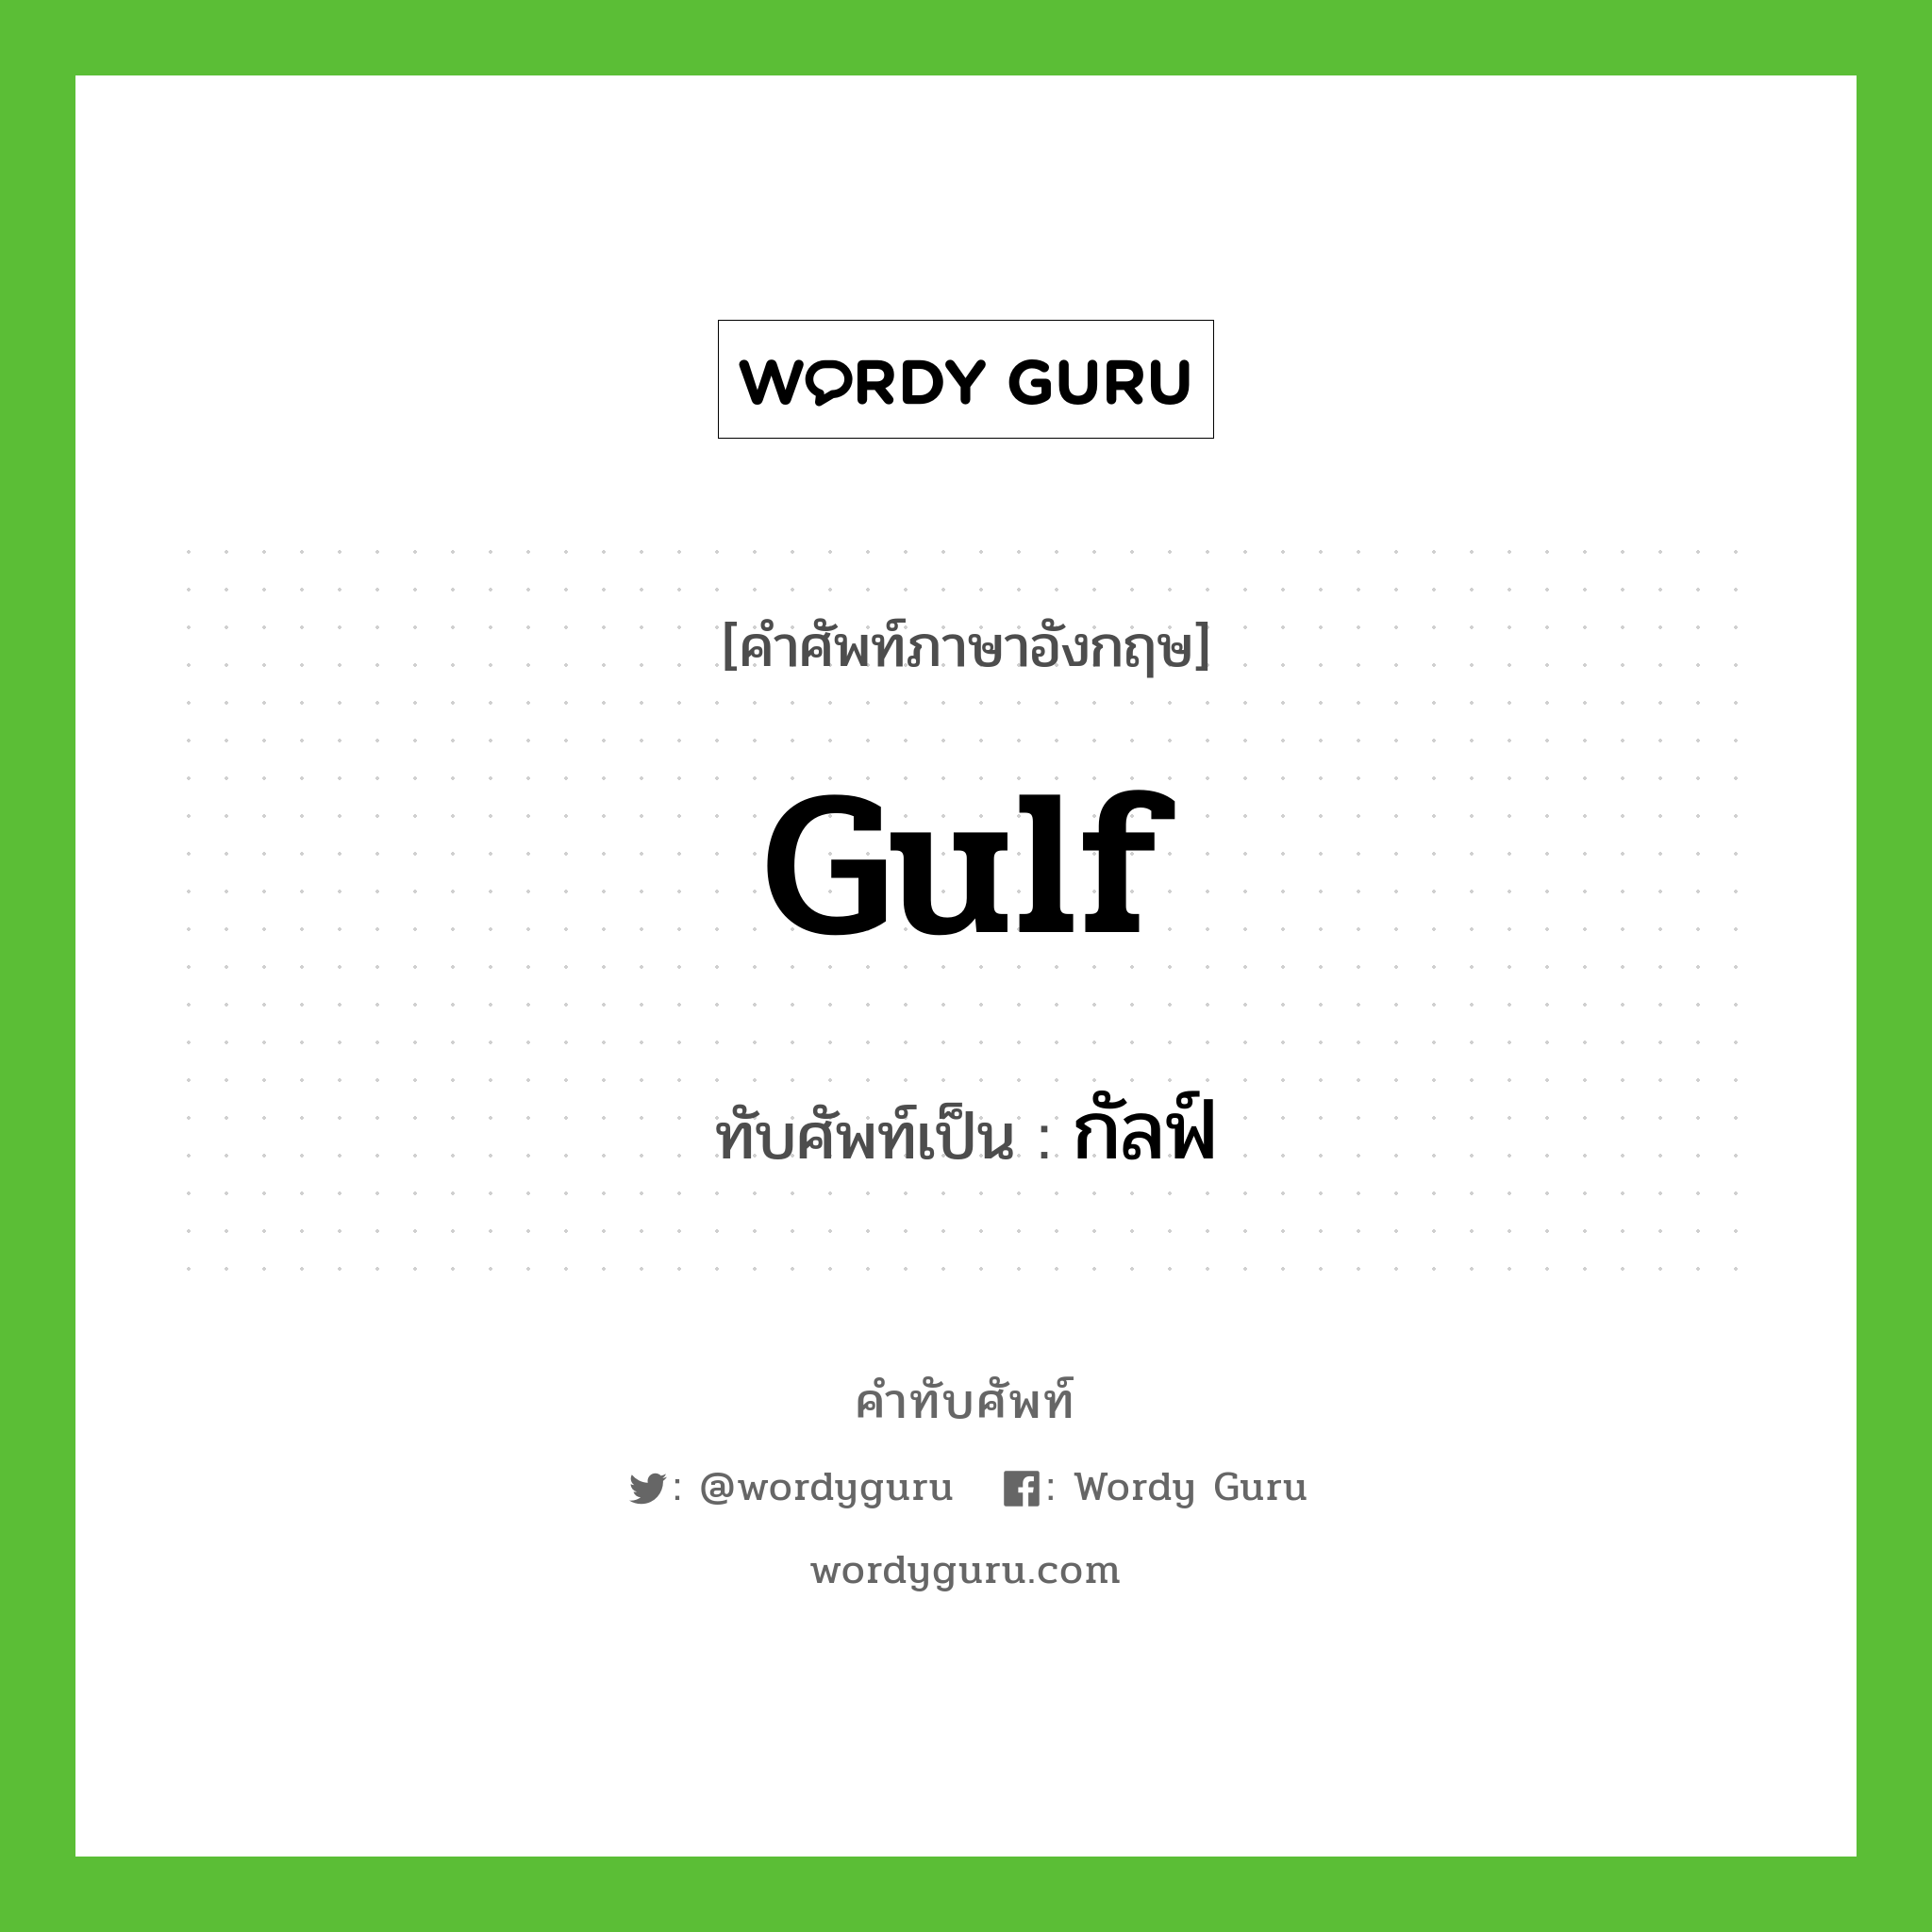 gulf เขียนเป็นคำไทยว่าอะไร?, คำศัพท์ภาษาอังกฤษ gulf ทับศัพท์เป็น กัลฟ์